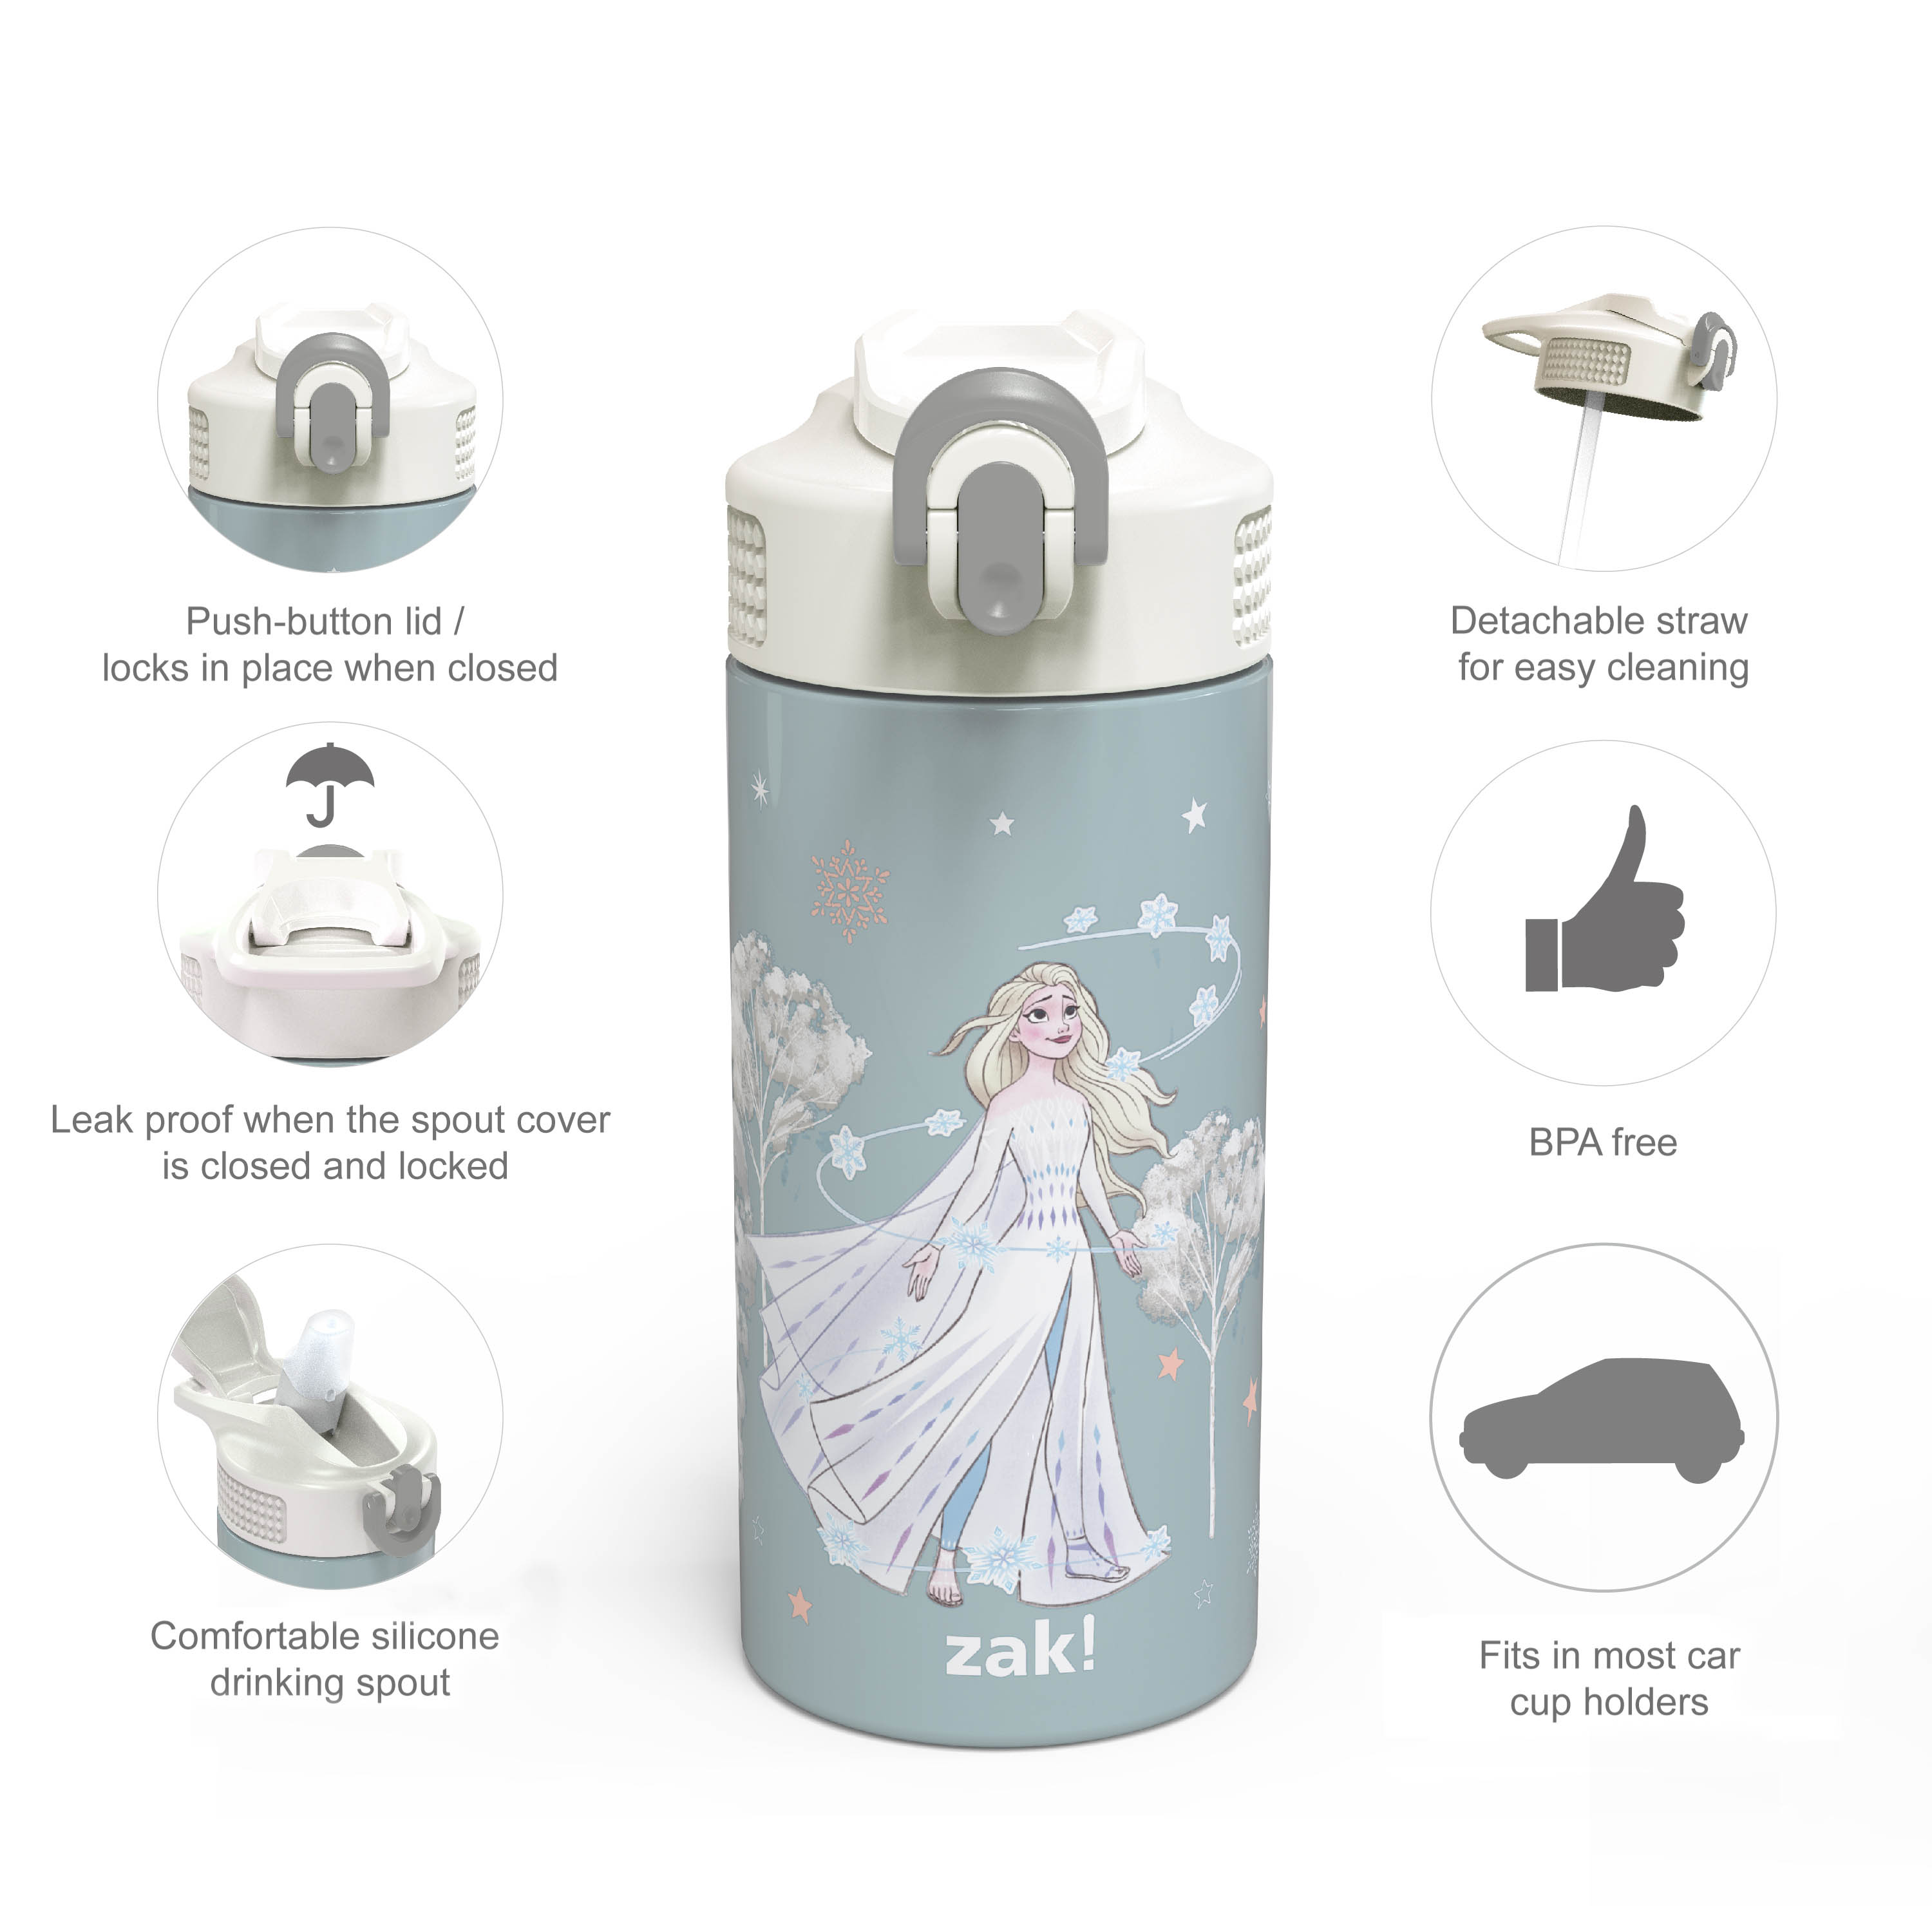 Disney Frozen Elsa Snowstorm 20 oz. Tritan Water Bottle